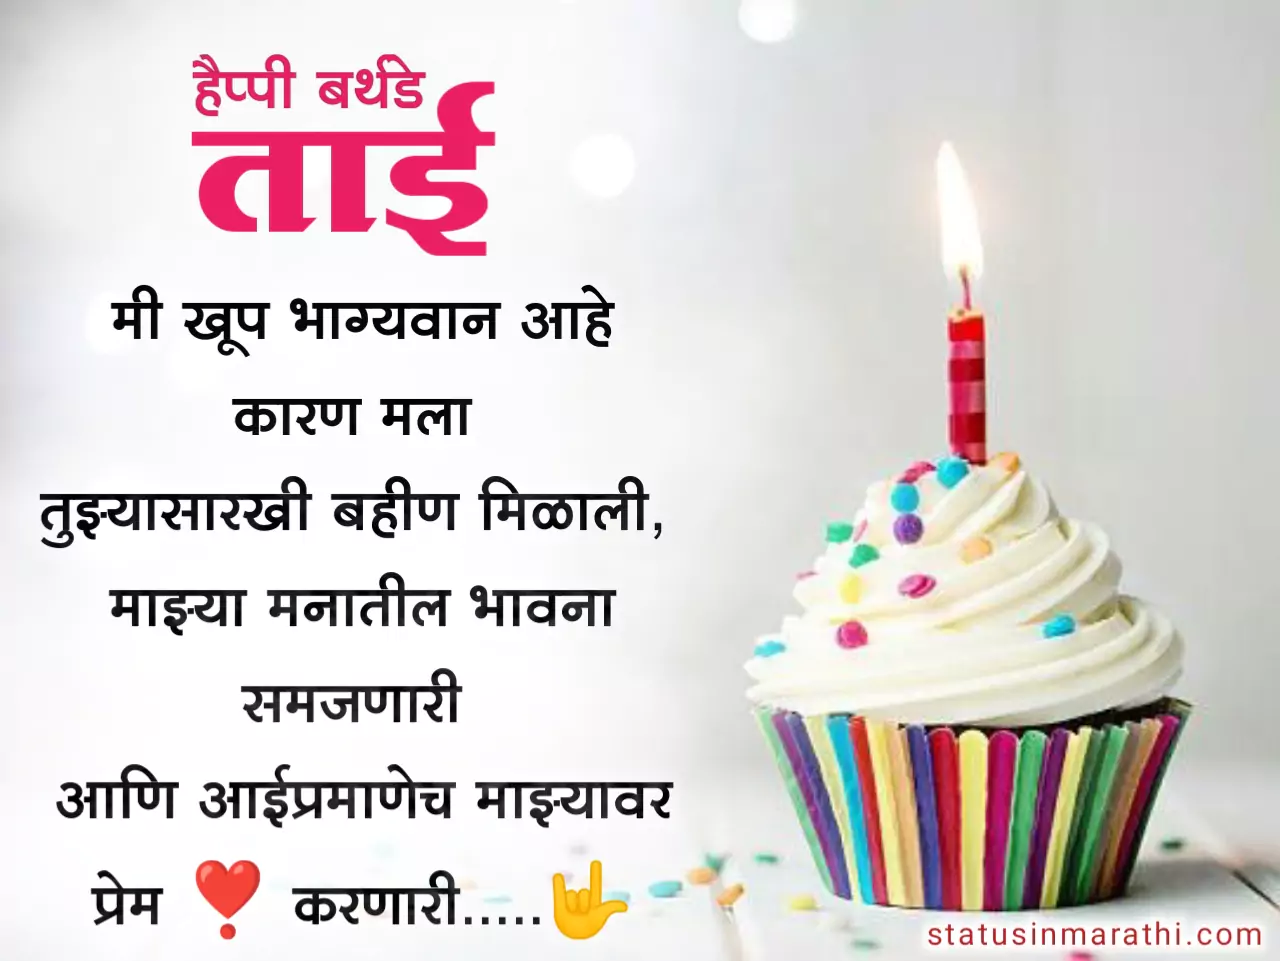 Sister birthday wishes in marathi